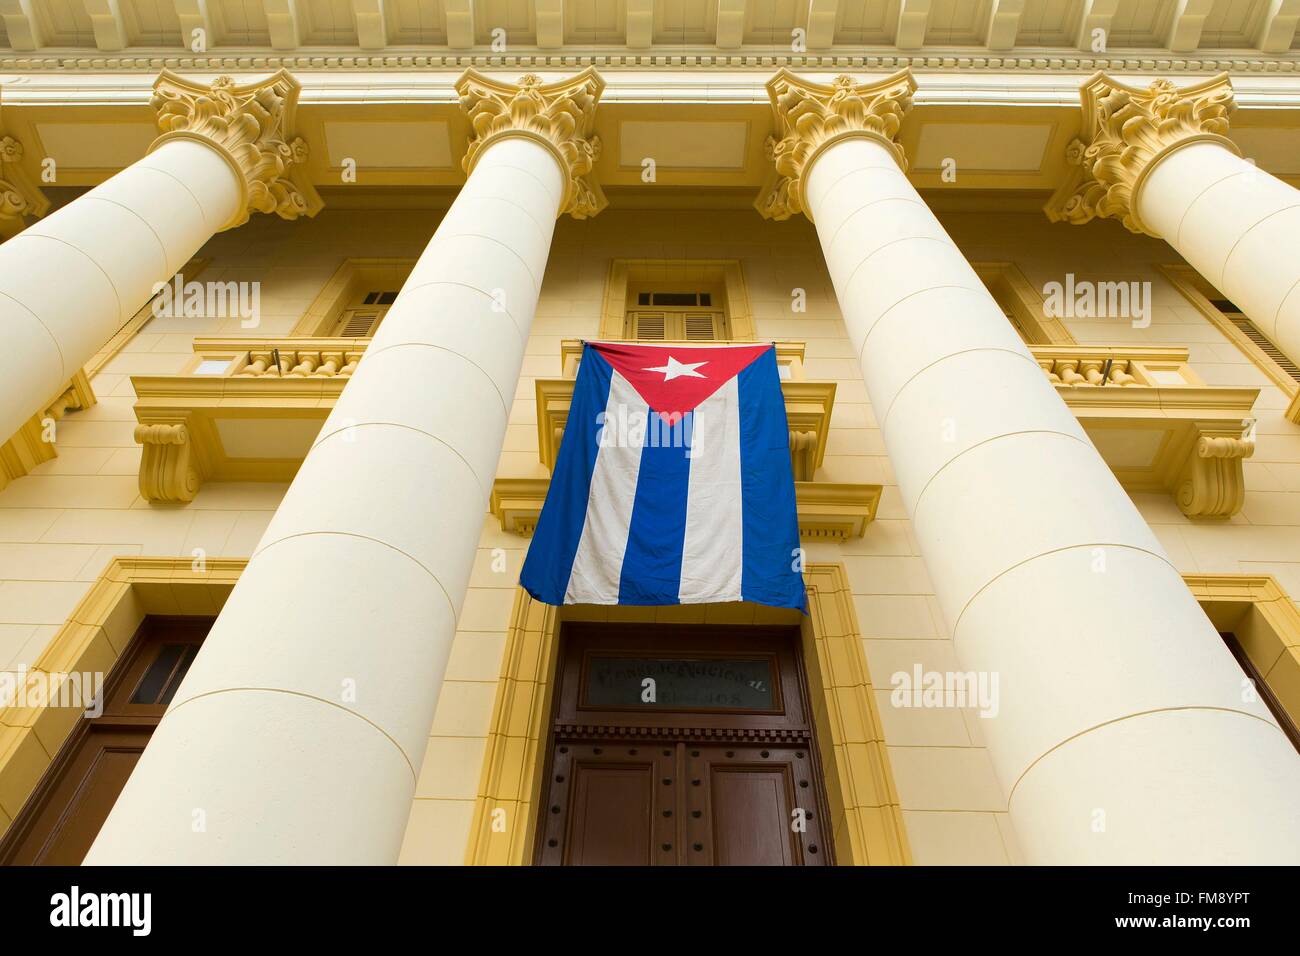 Cuba, Ciudad de la Habana Province, La Havana, Centro Habana distretto, bandiera cubana e la facciata neoclassica Foto Stock